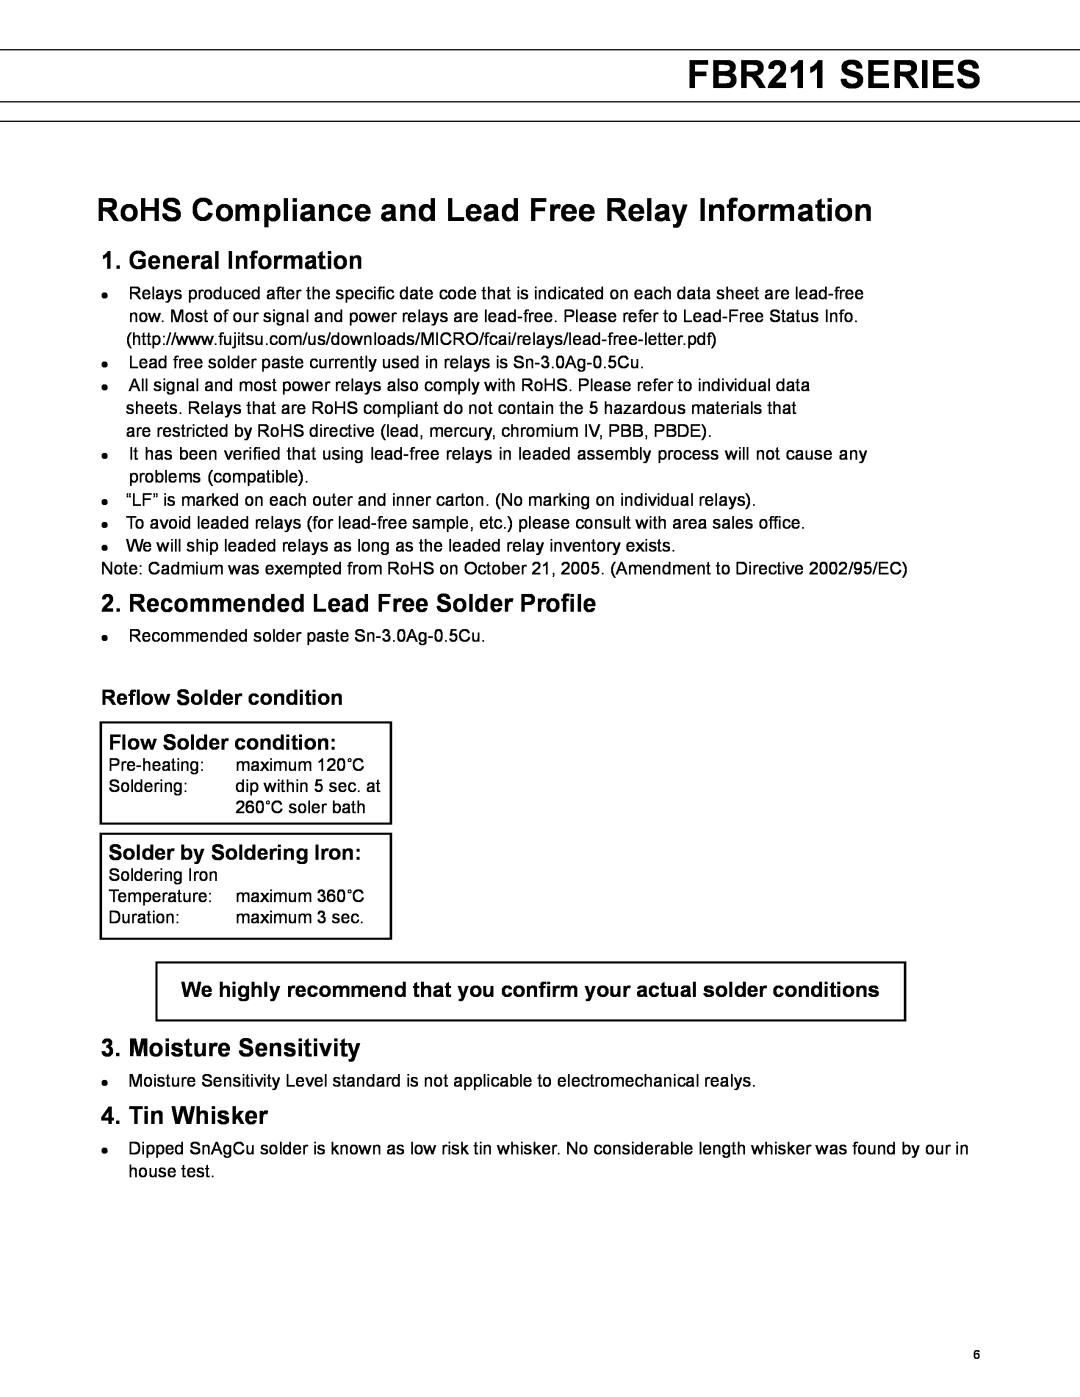 Fujitsu Reflow Solder condition Flow Solder condition, Solder by Soldering Iron, FBR211 SERIES, General Information 